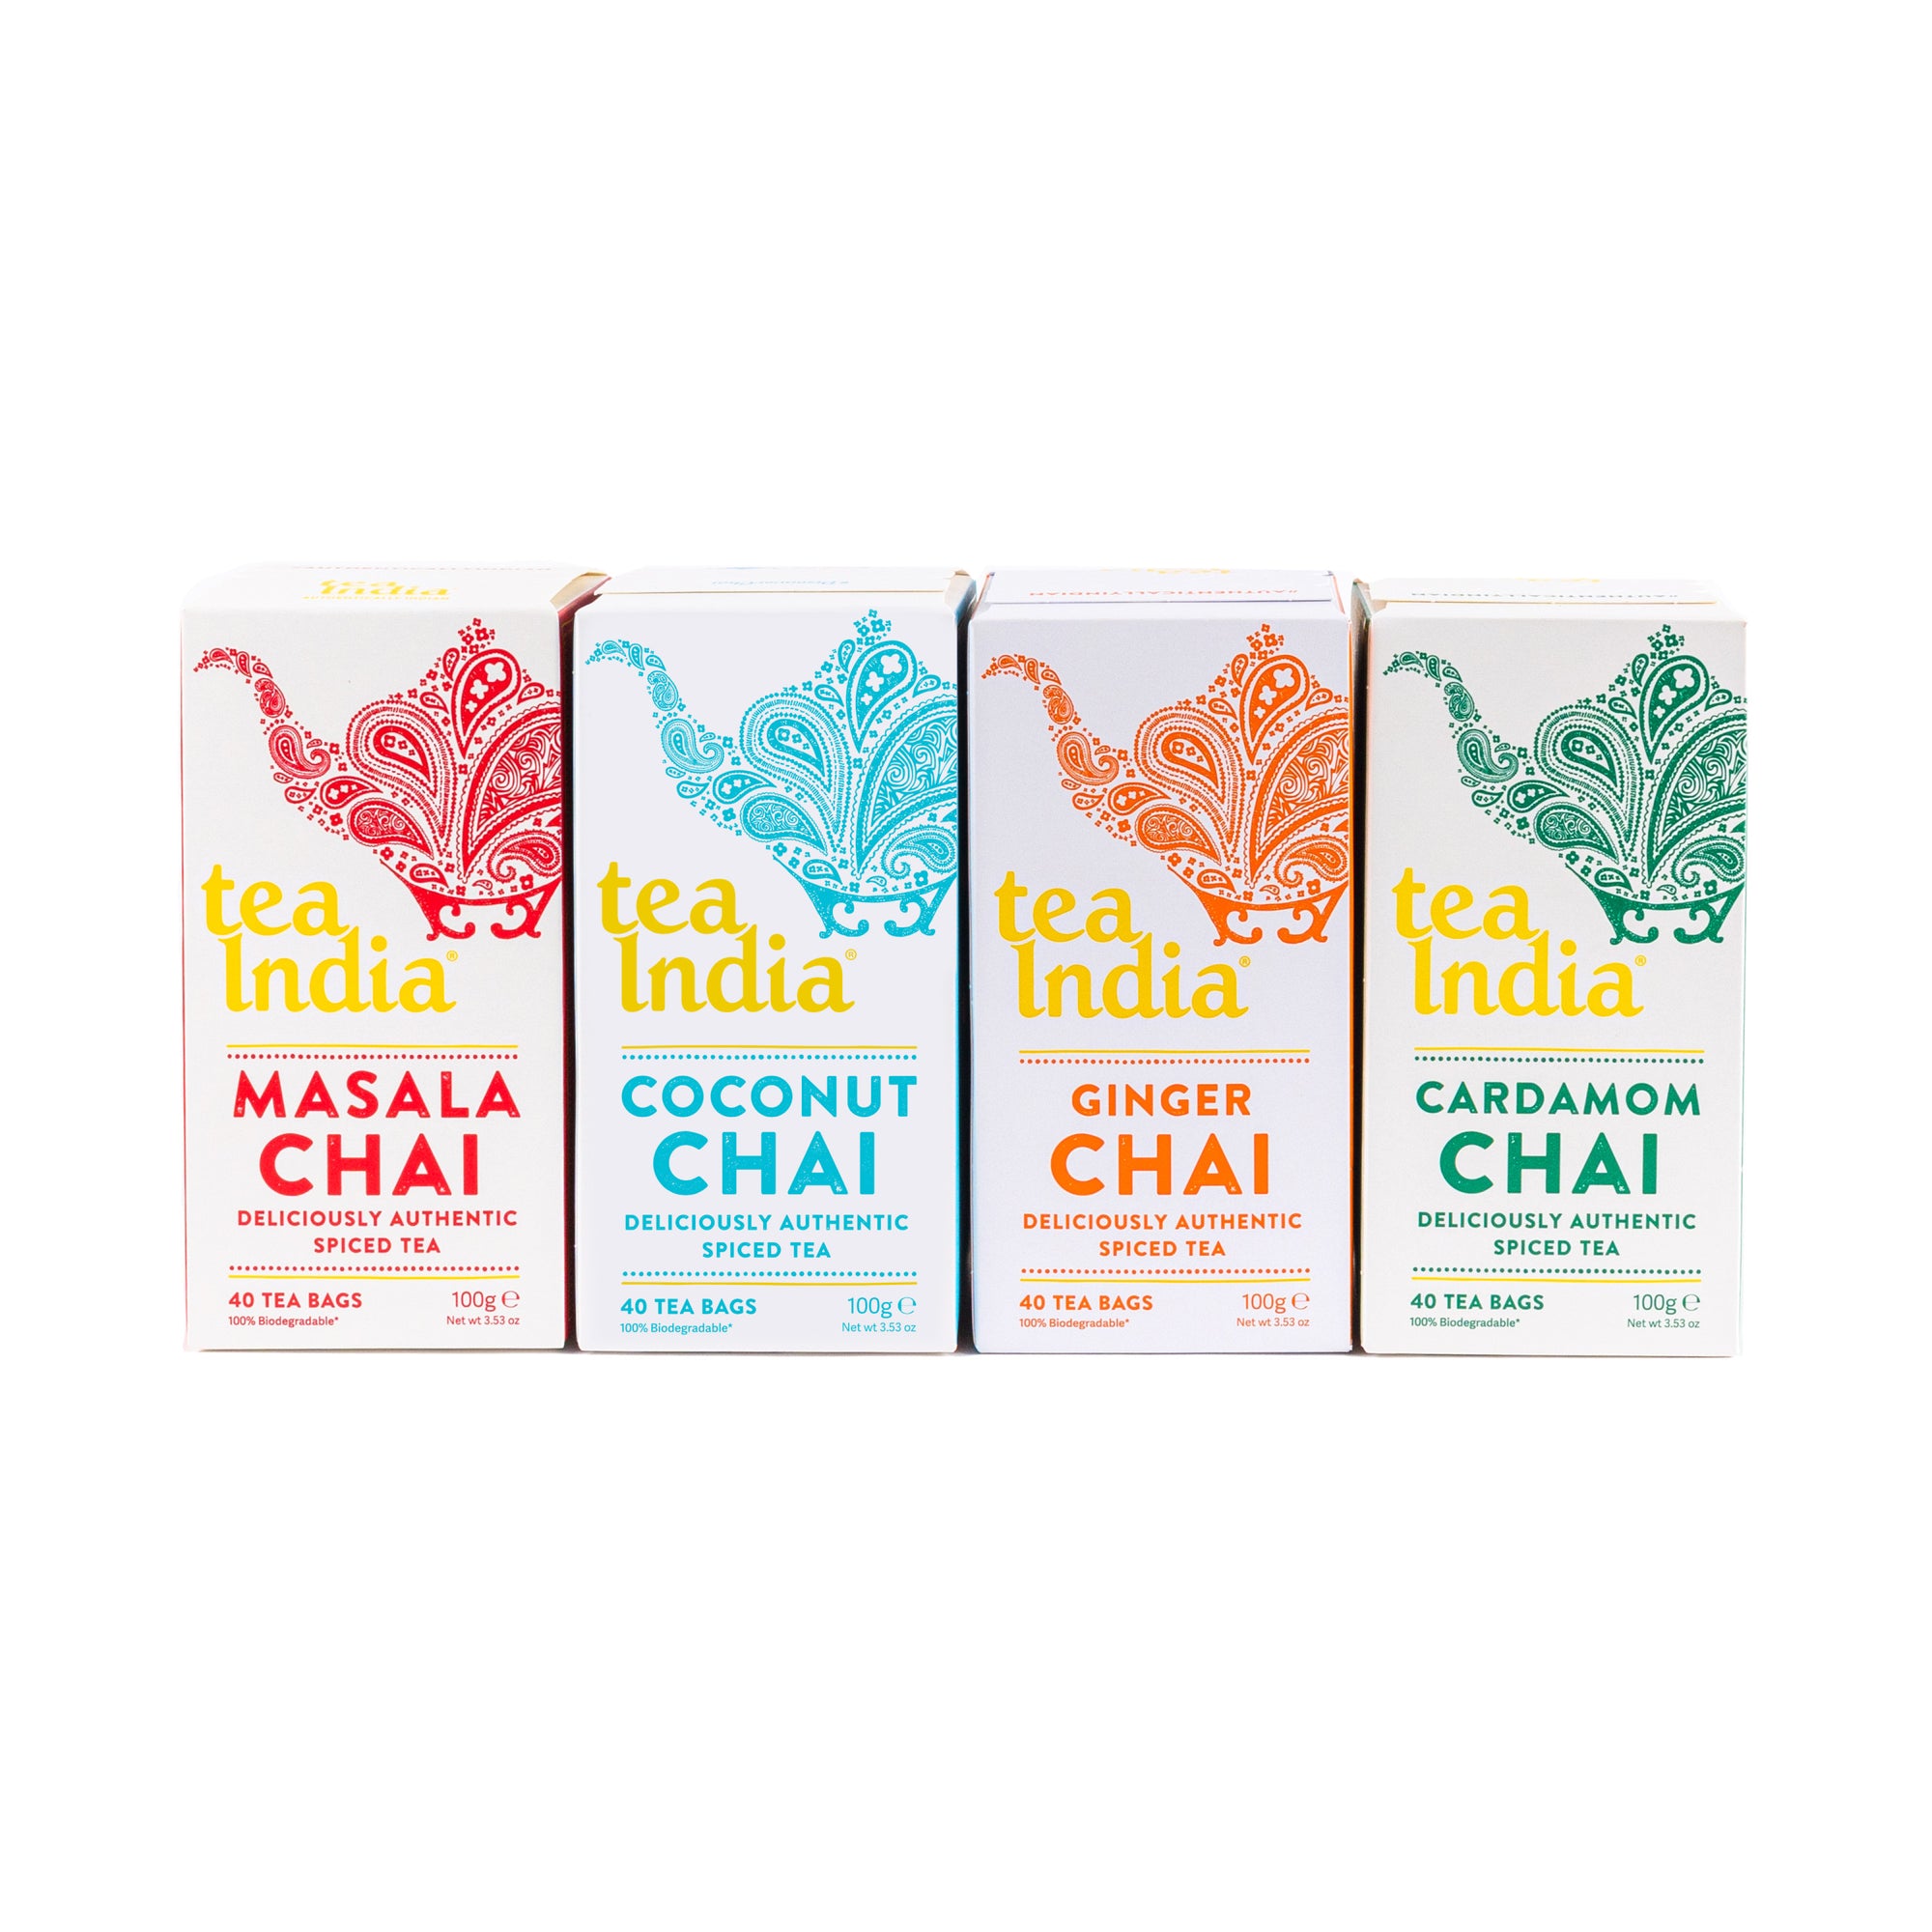 Mixed Chai & Tea Bundles